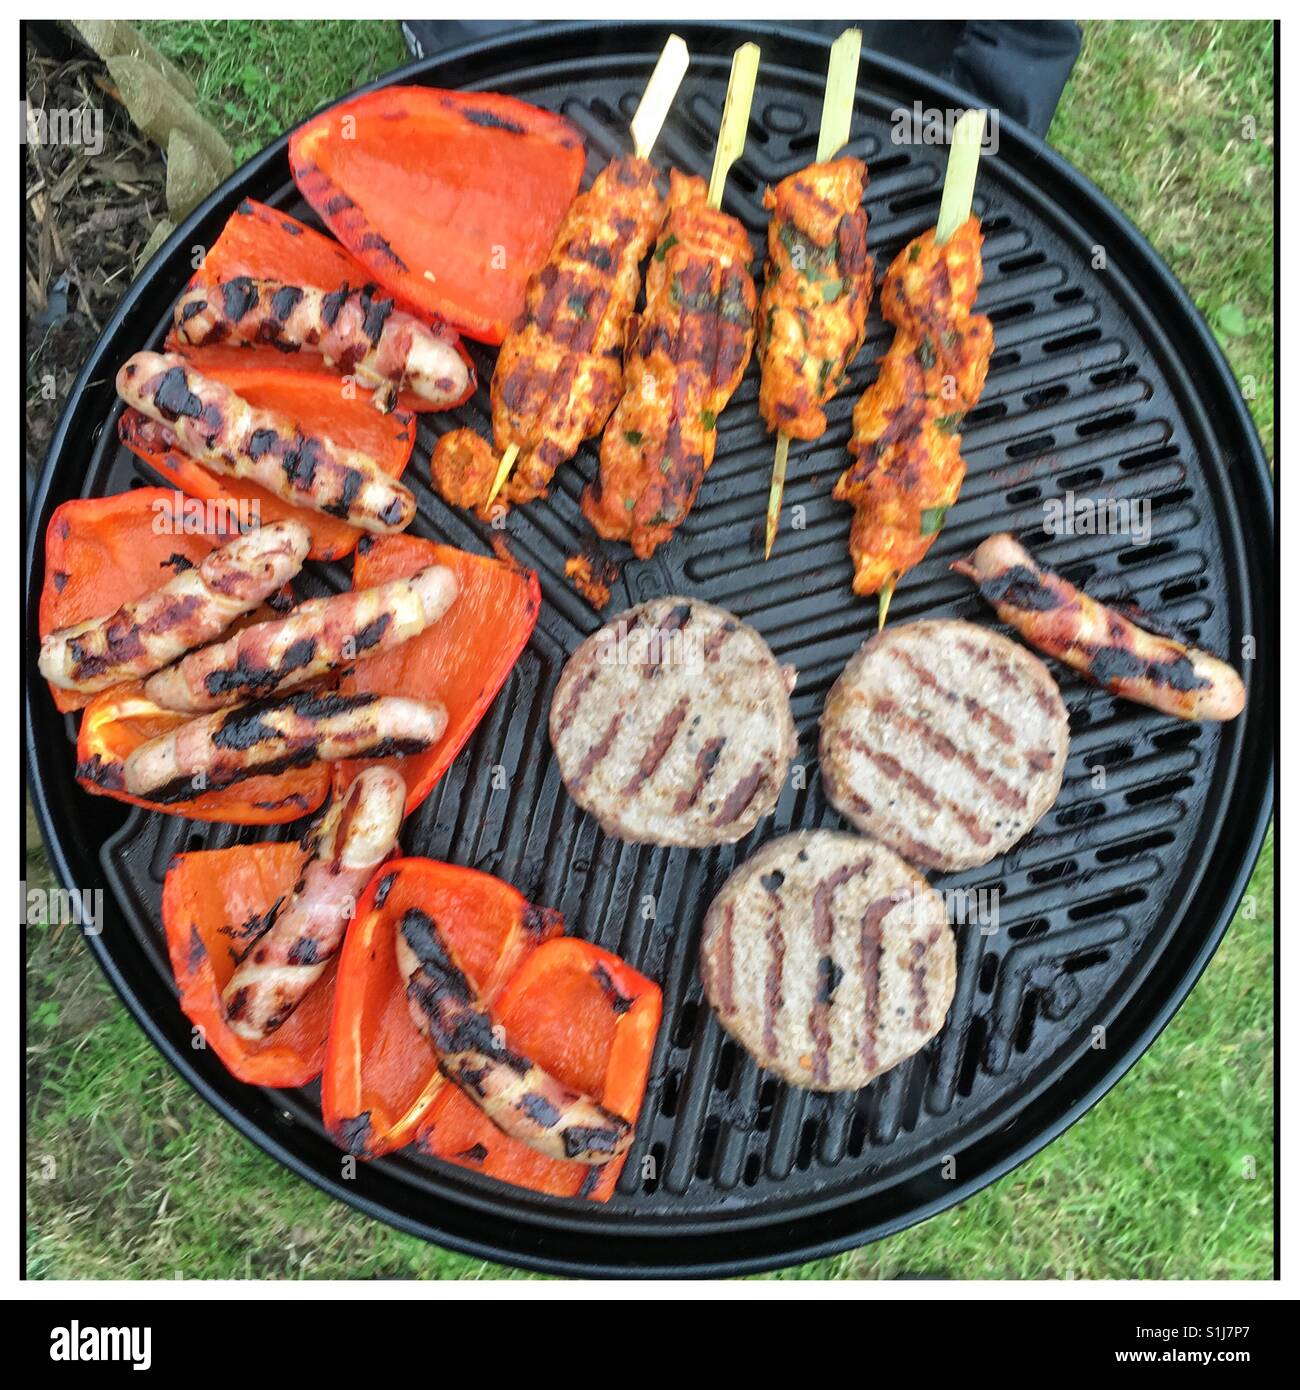 Cadac BBQ with food Stock Photo - Alamy